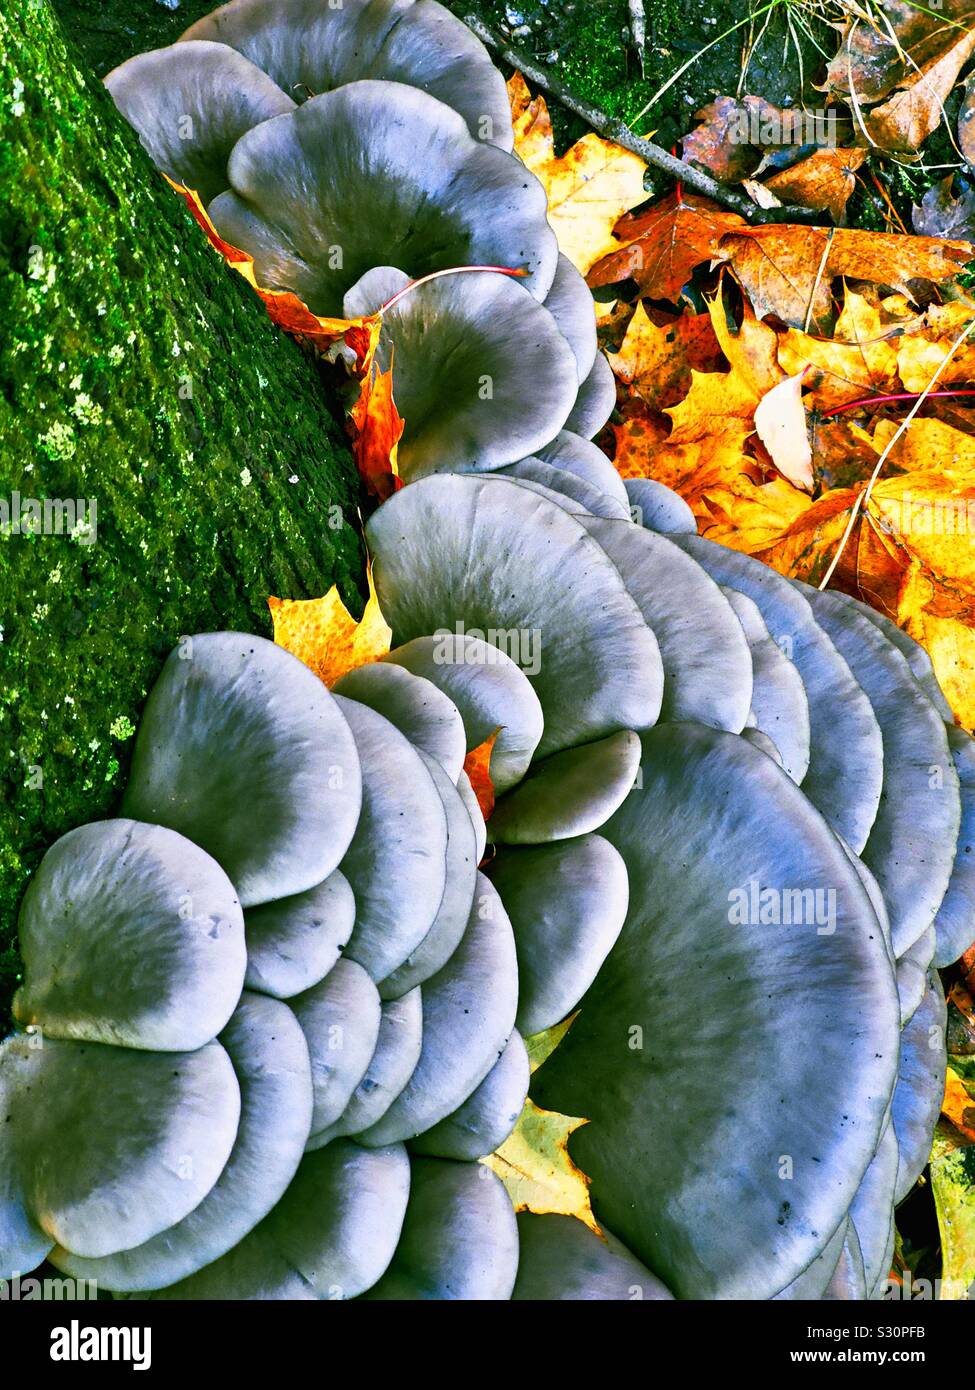 Wild mushrooms growing on tree, Sweden Stock Photo